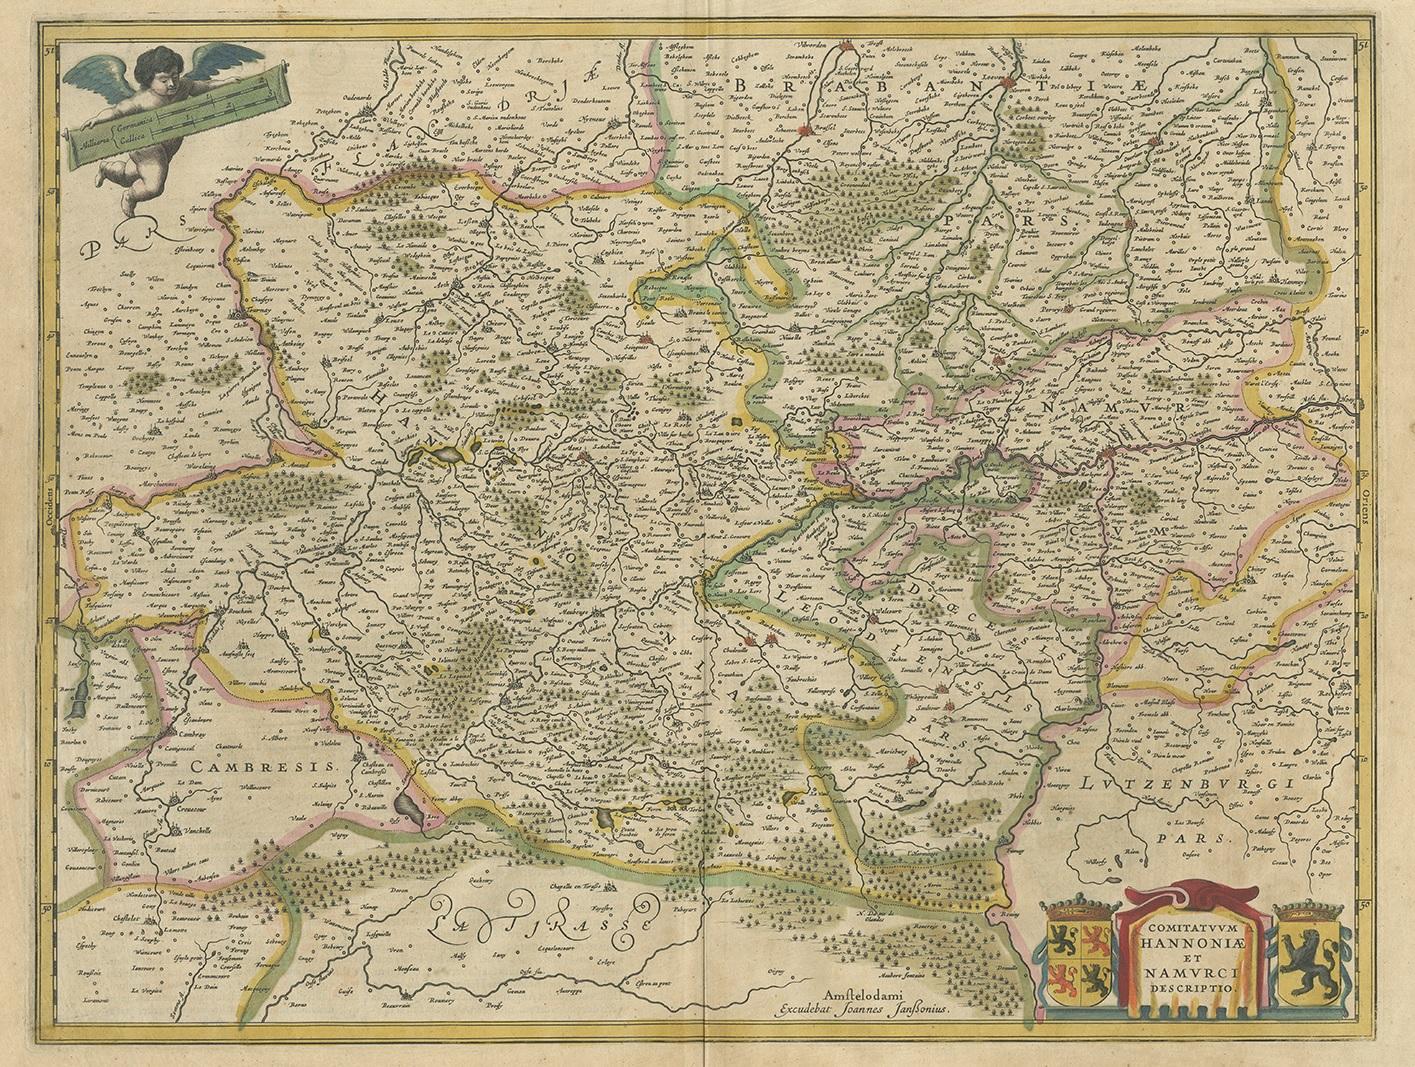 Antique map titled 'Comitatuum Hannoniae et Namurci Descriptio'. Old map of the region of Hainaut and Namur, France. Published by J. Janssonius, circa 1640.